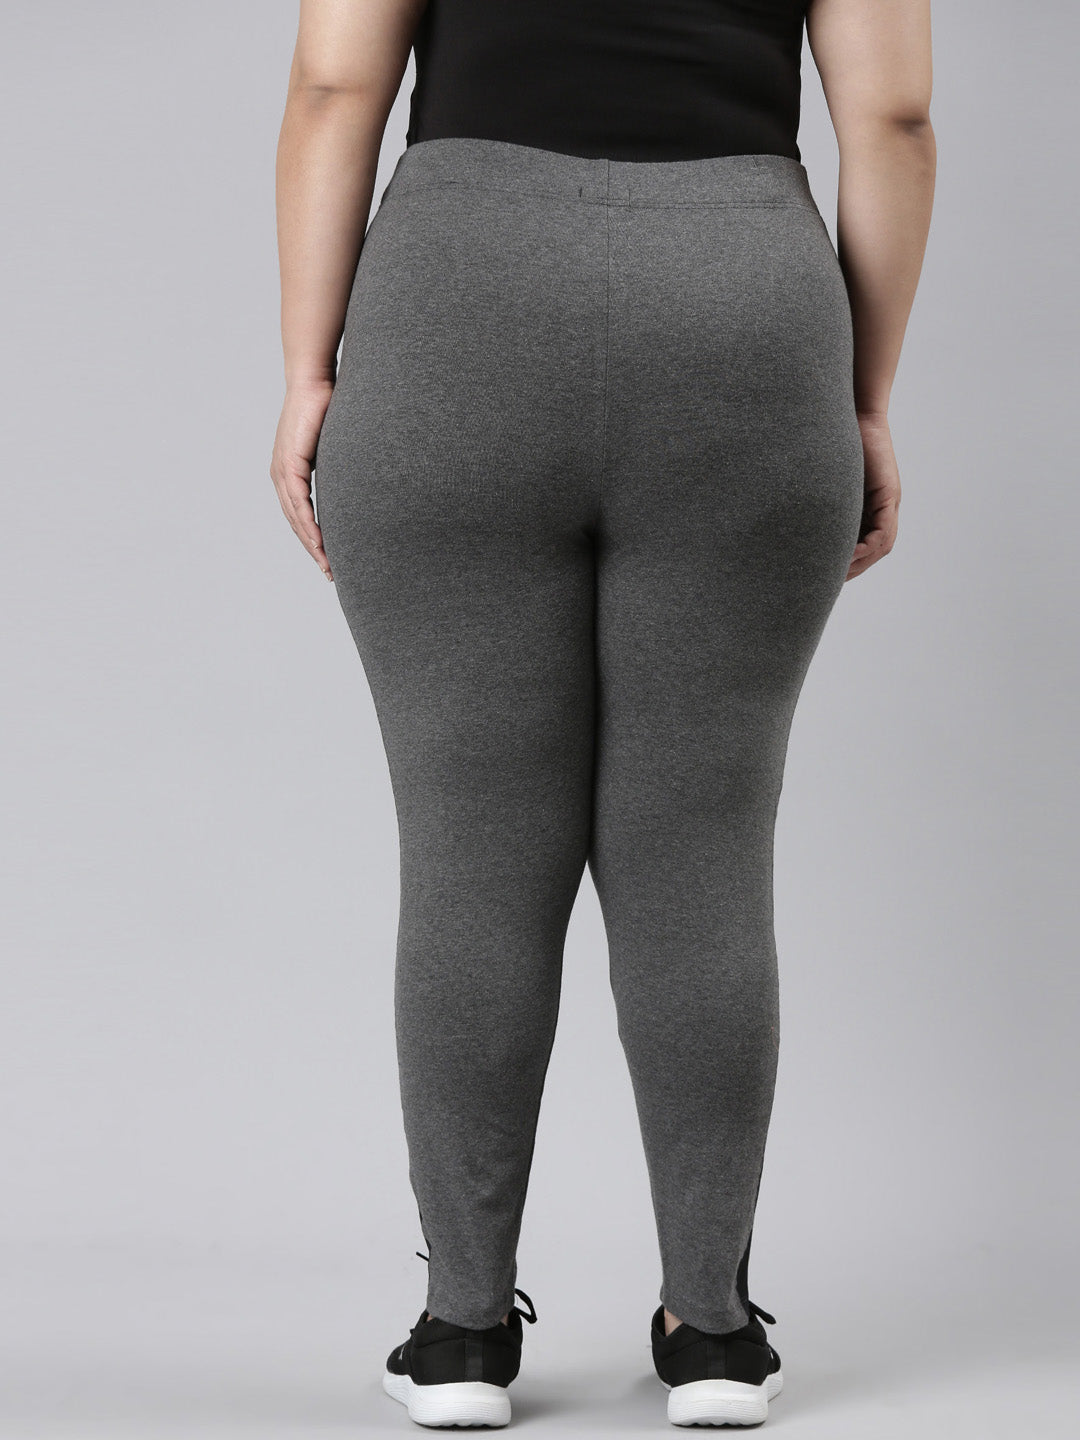 Uni Hosiery Co. Sofra Ladies Fleece Lined Leggings - Charcoal / Gray 